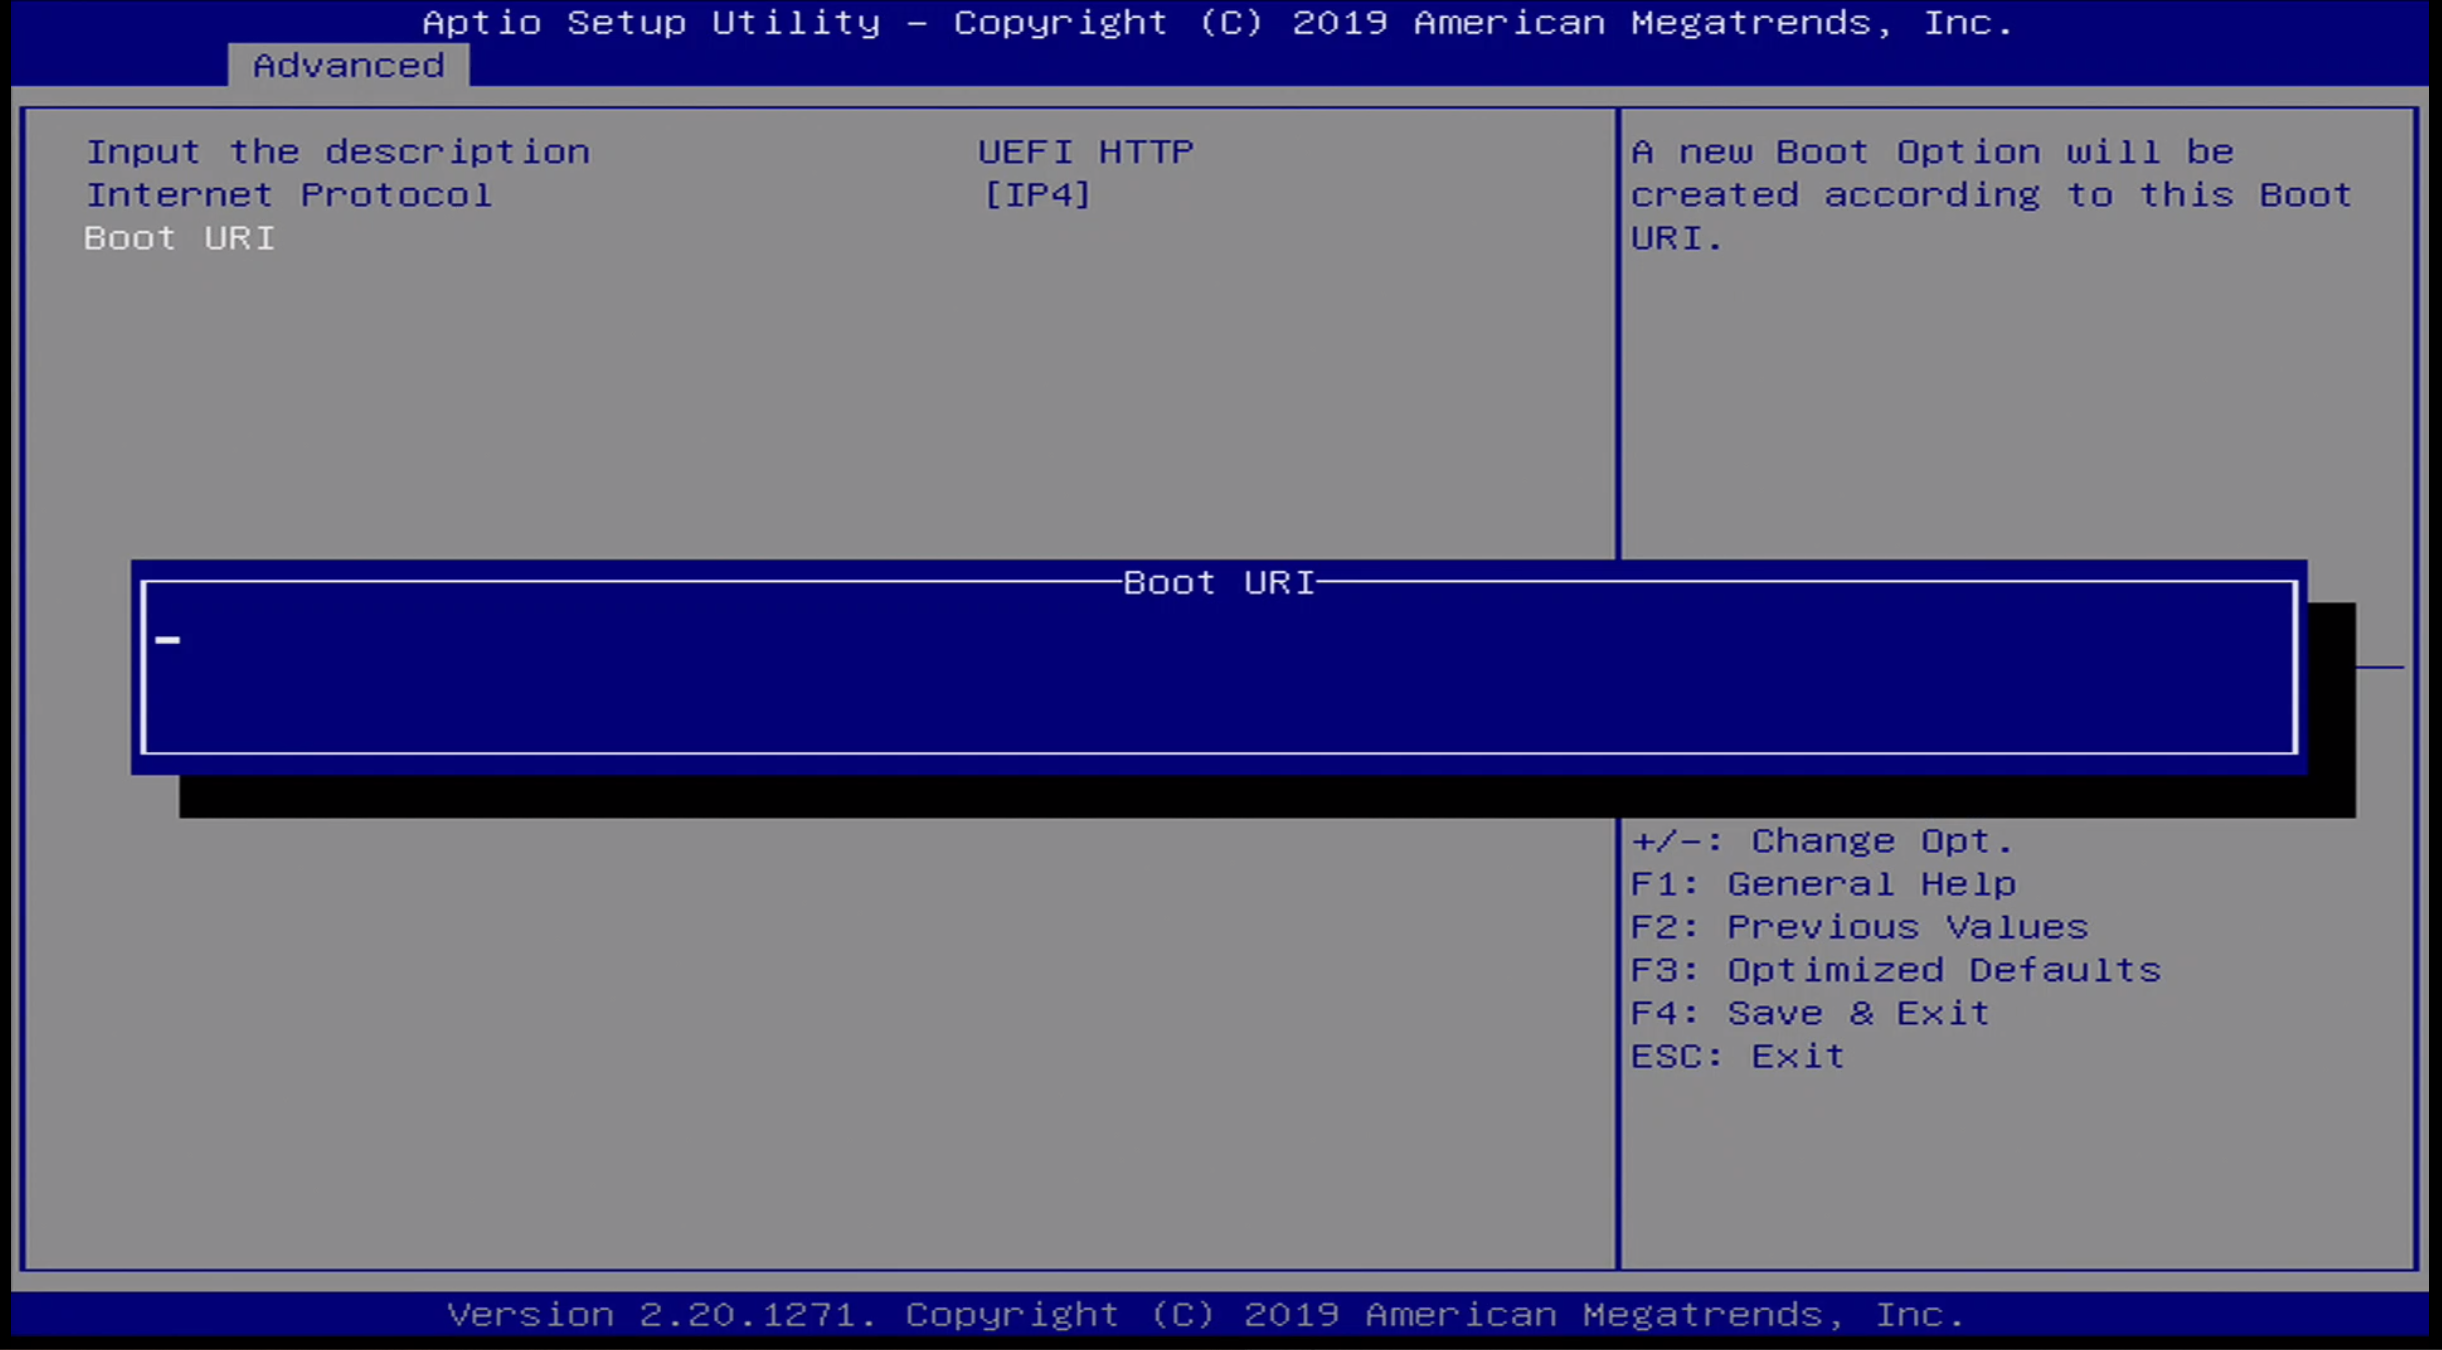 ONN BIOS Advanced / UEFI HTTP Boot Menu